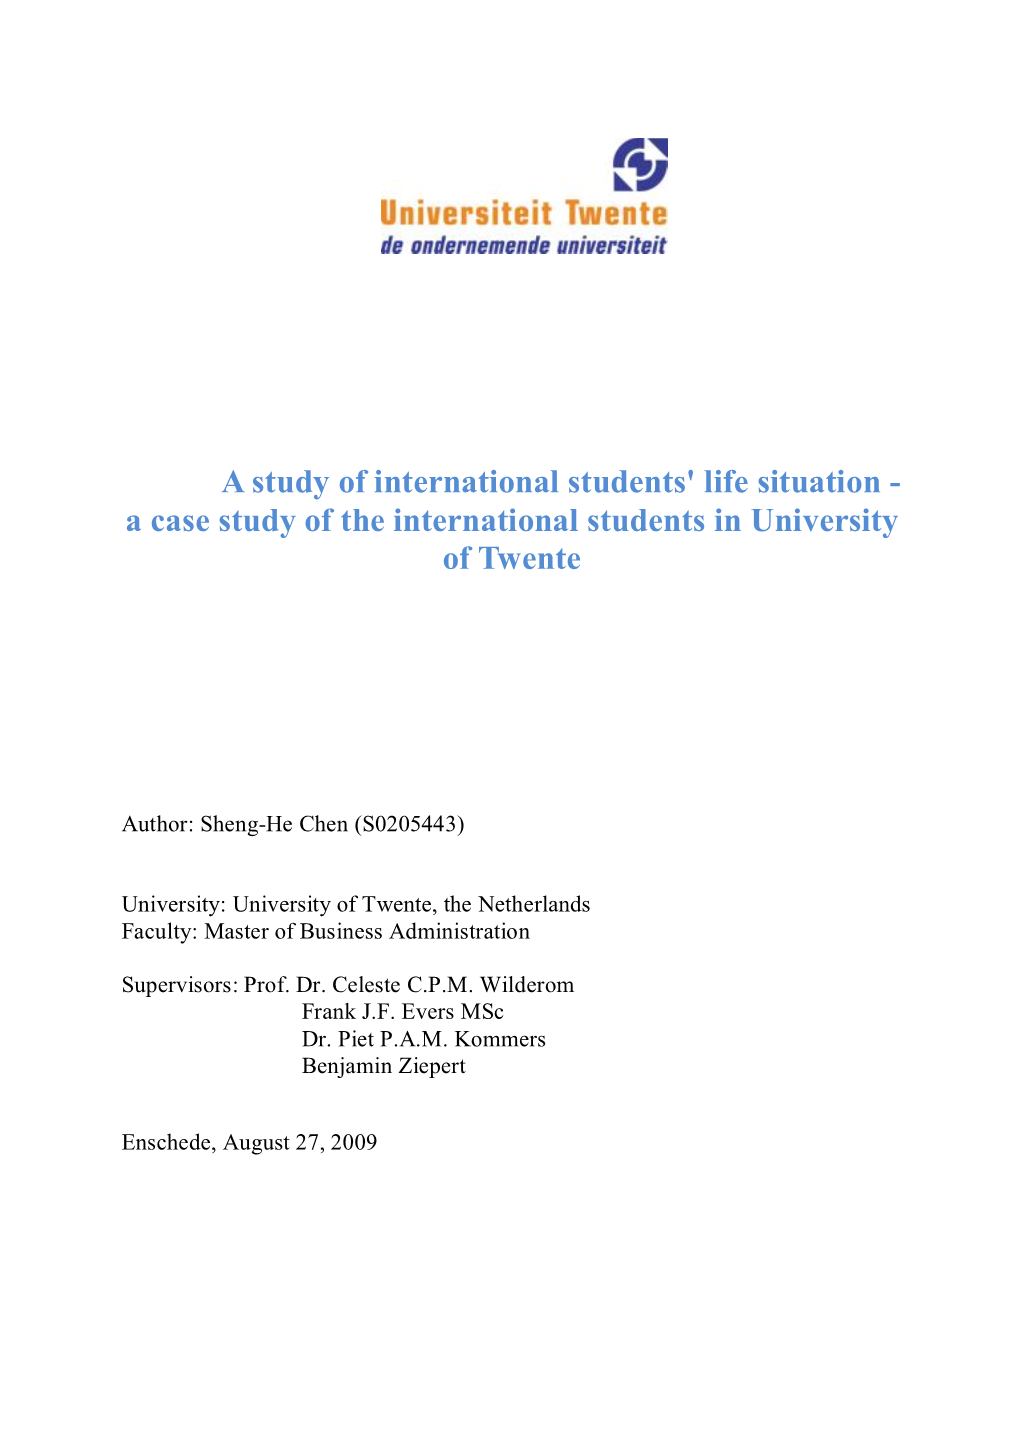 A Study of International Students' Life Situation - a Case Study of the International Students in University of Twente